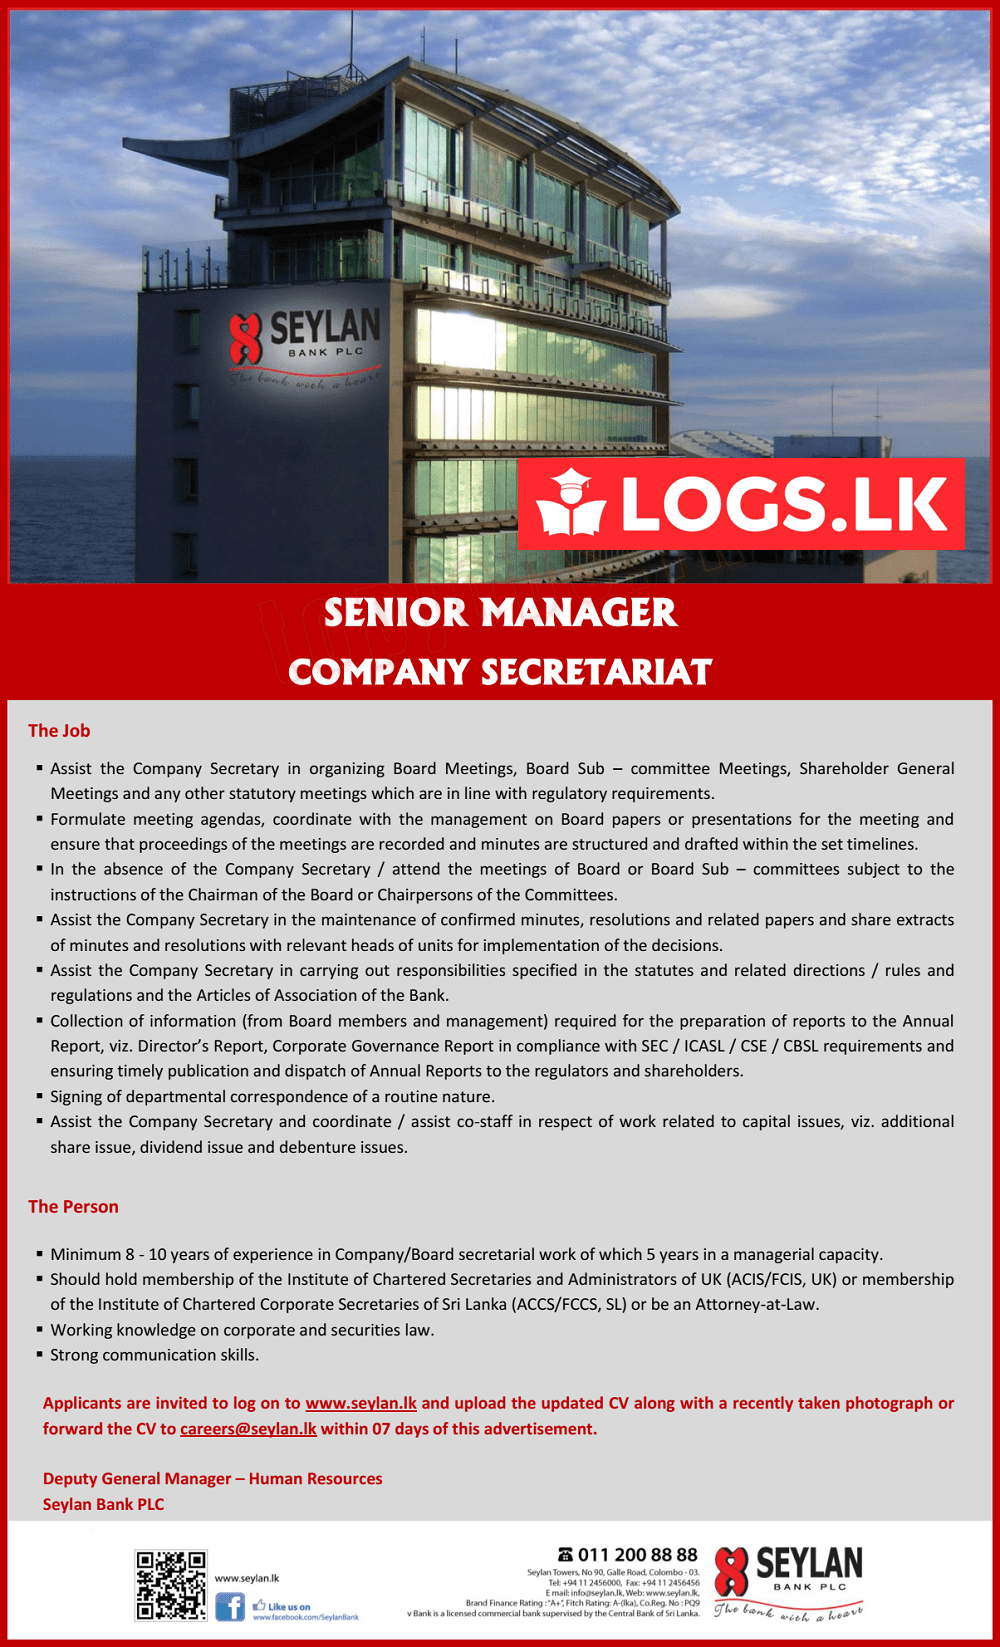 Senior Manager (Company Secretariat) Vacancy - Seylan Bank Jobs Vacancies